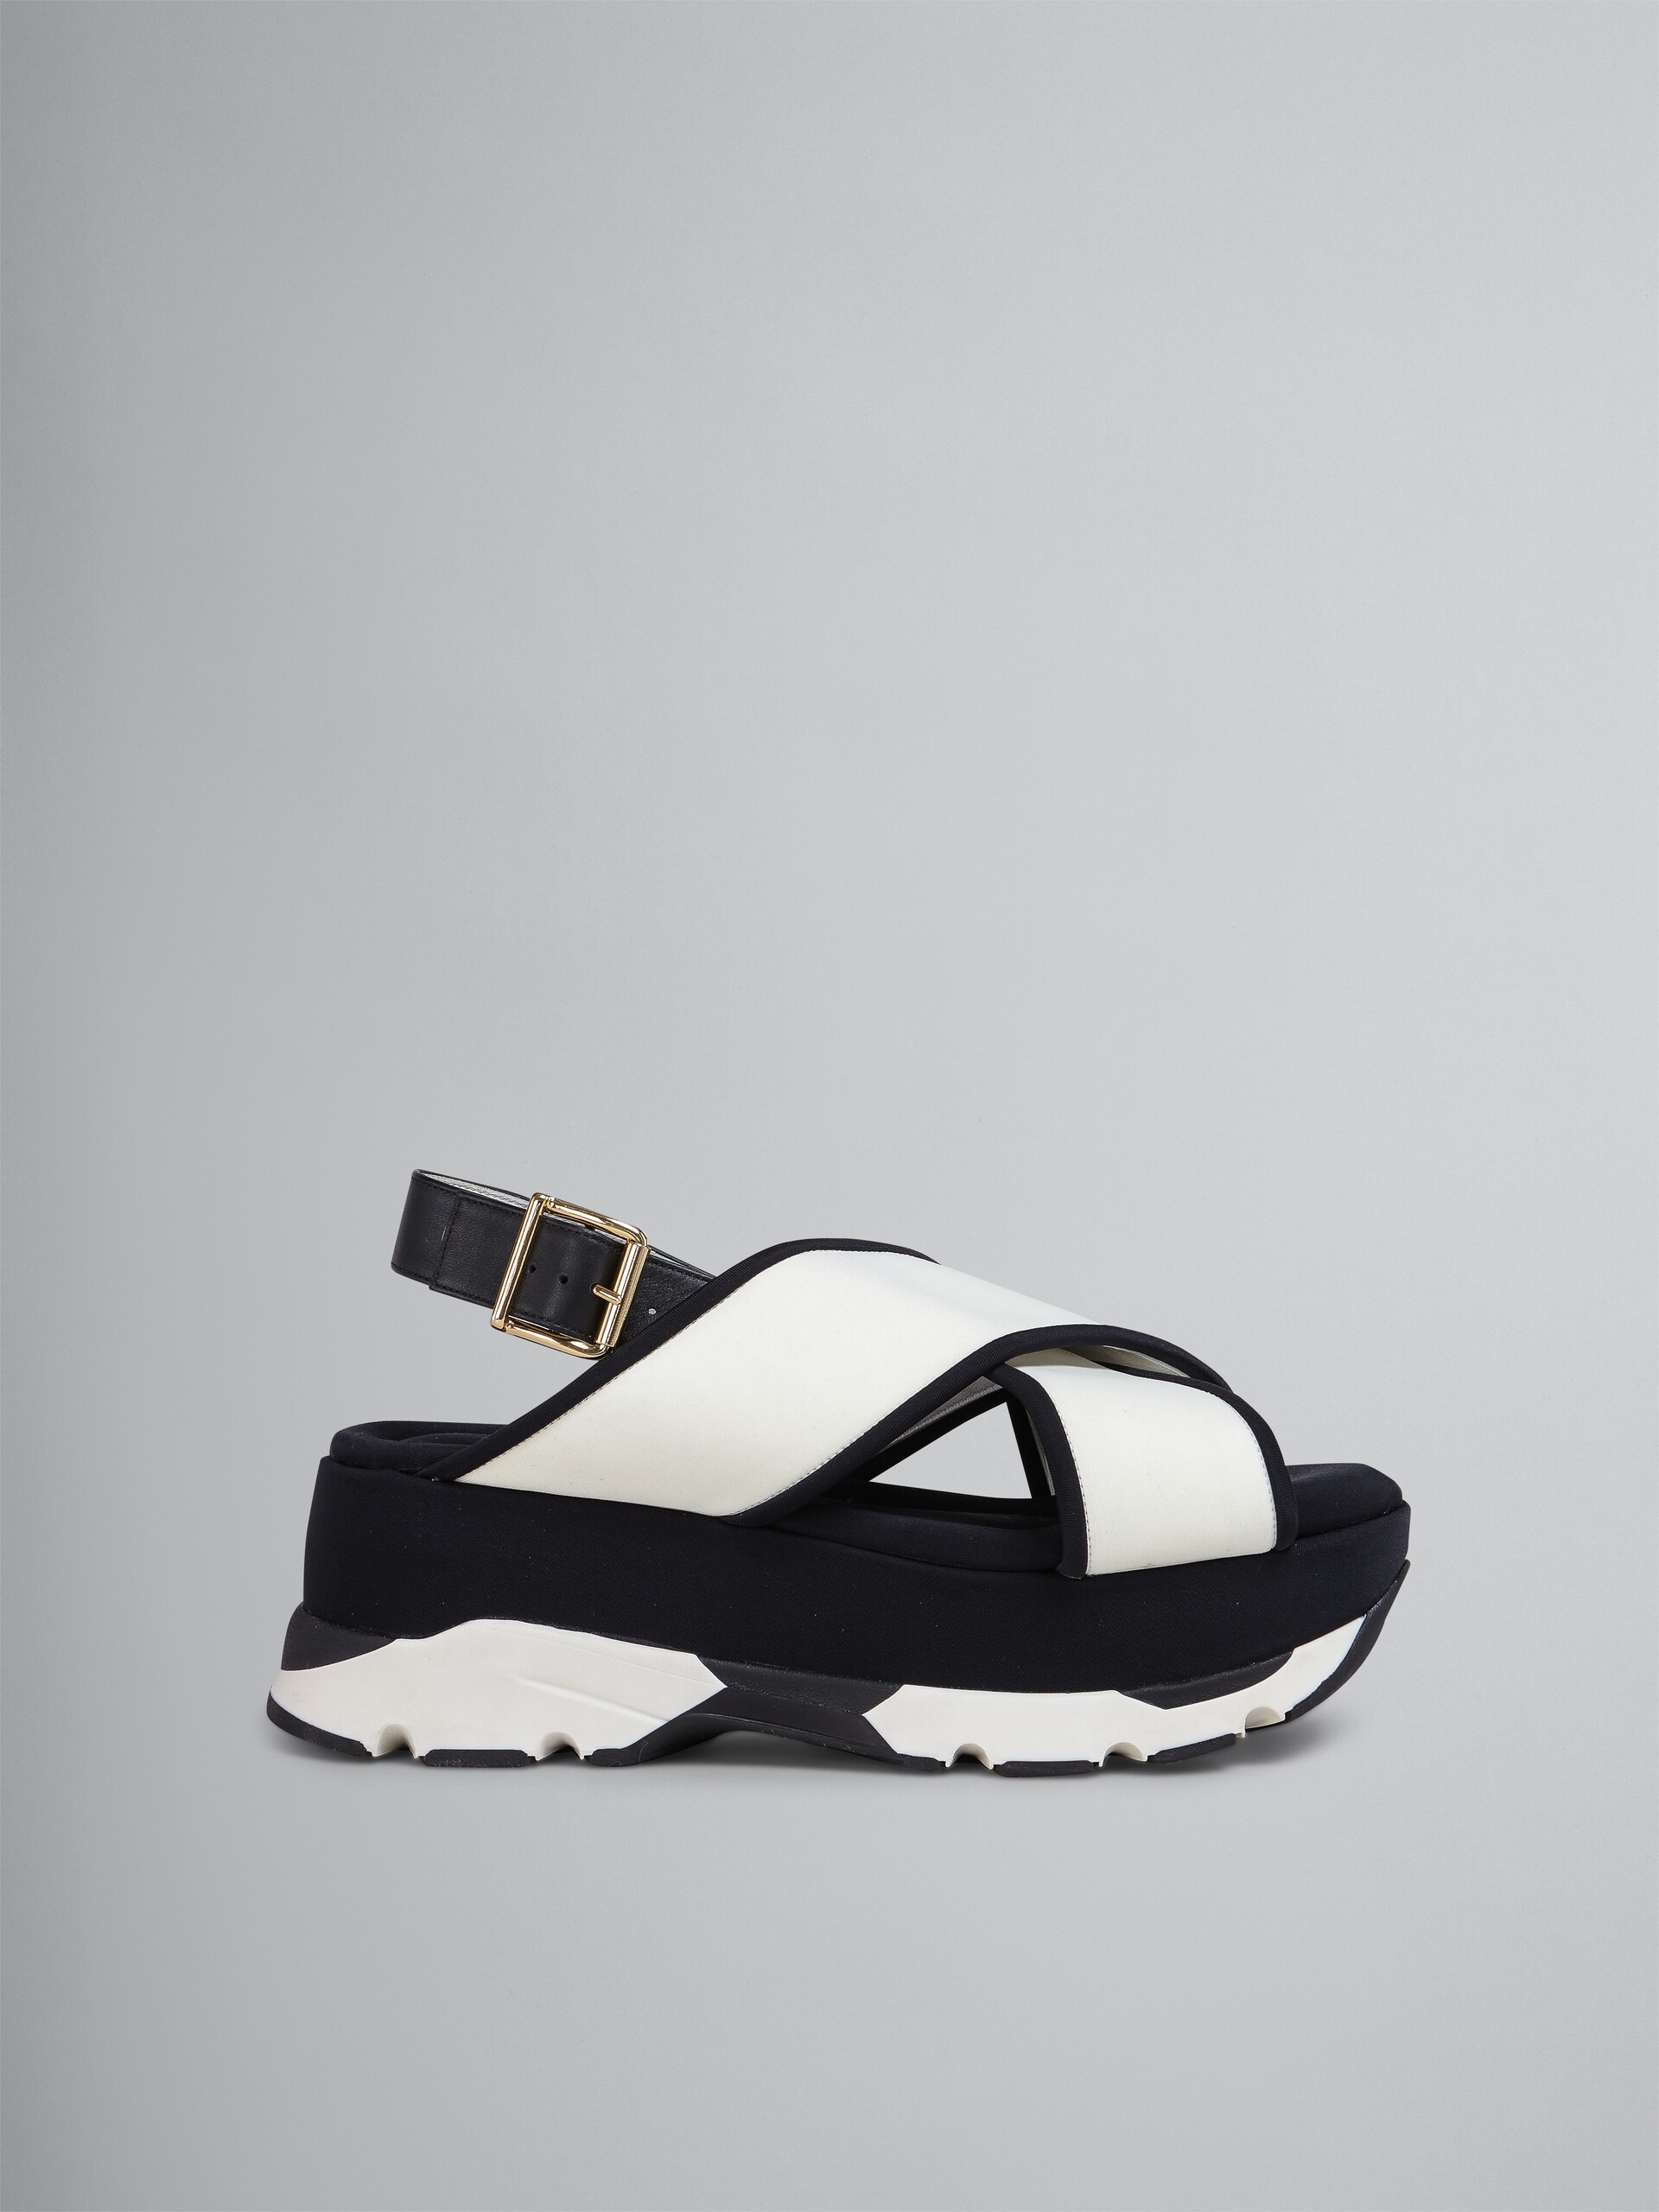 White black tech fabric criss-cross wedge sandal - Sandals - Image 1